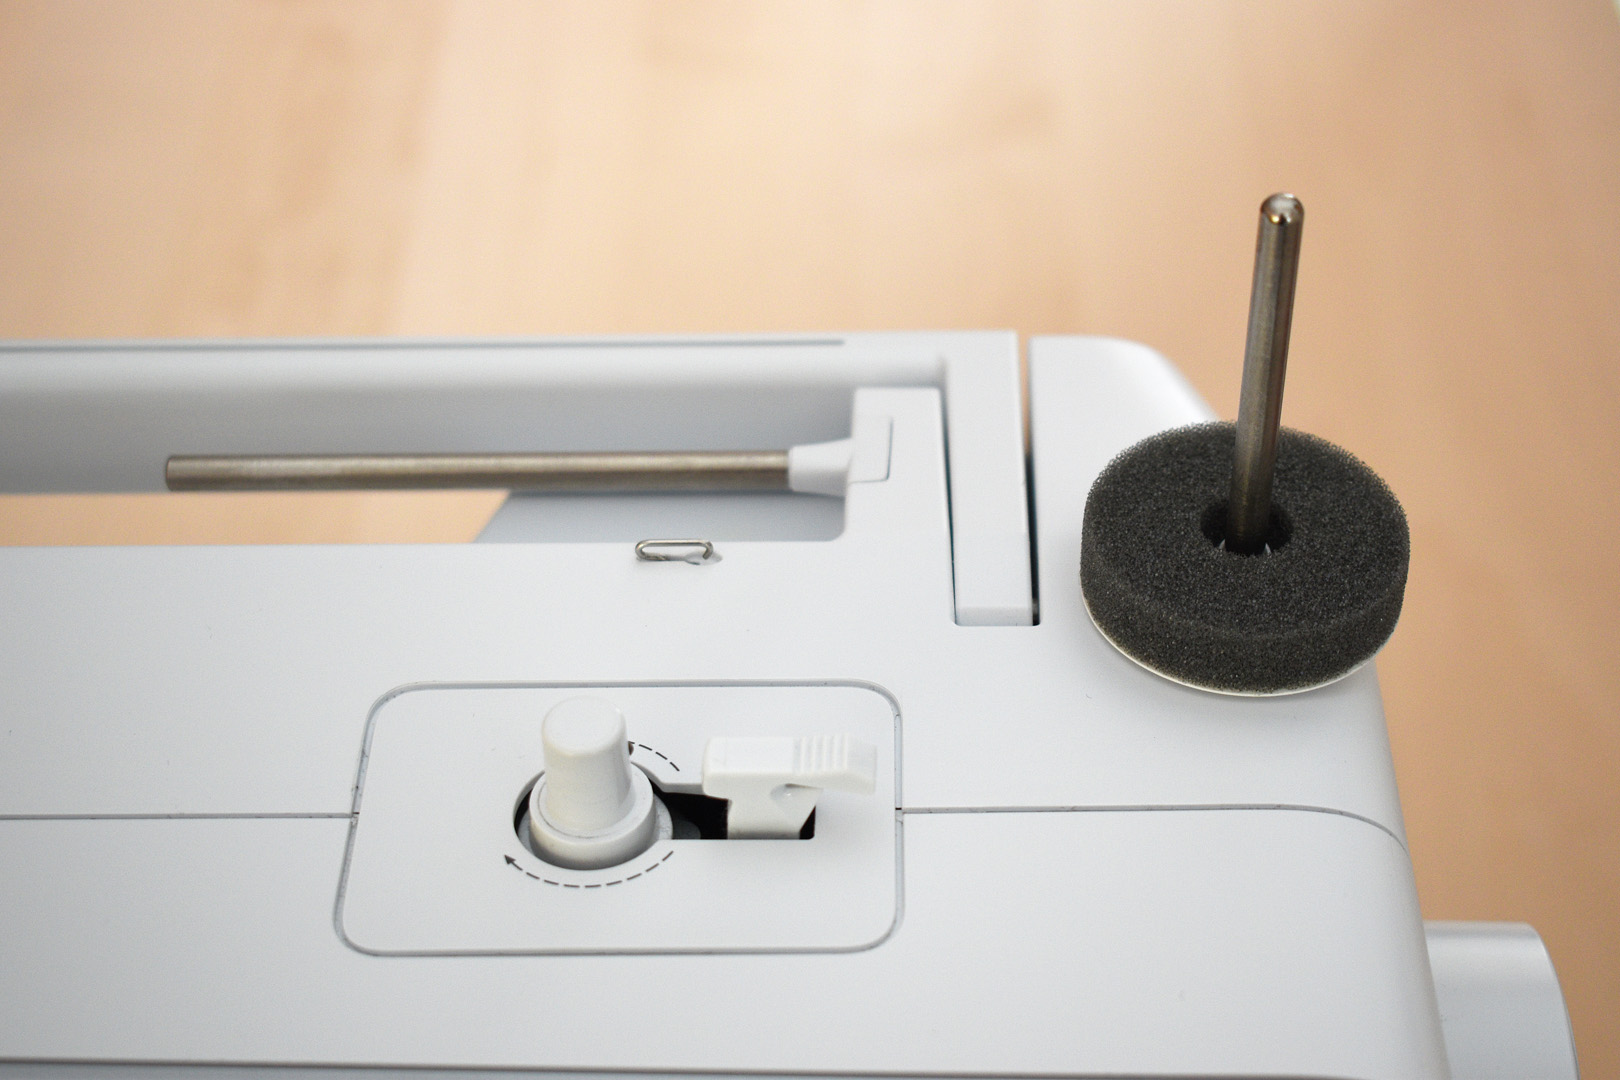 Sewing Machine Thread Spool Pin Tips - WeAllSew